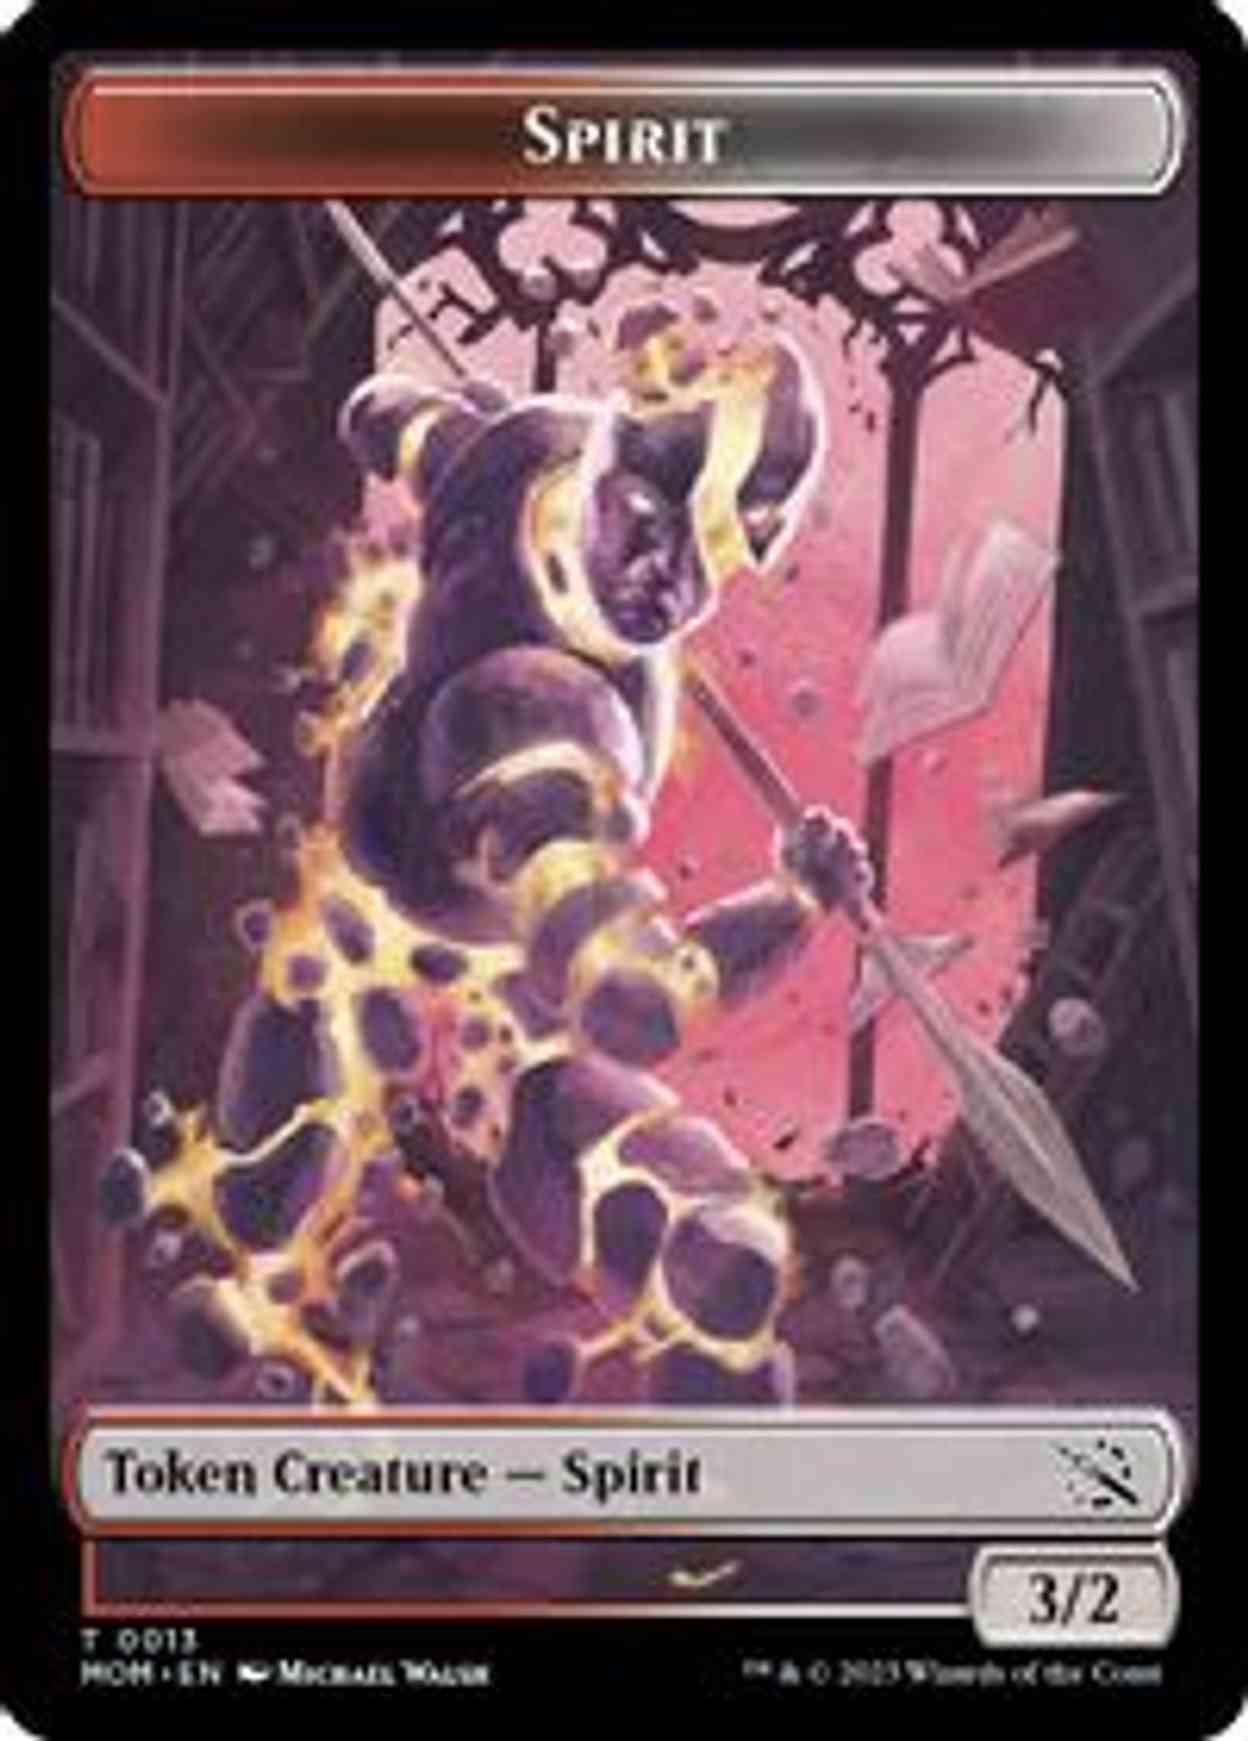 Spirit (0013) Token magic card front